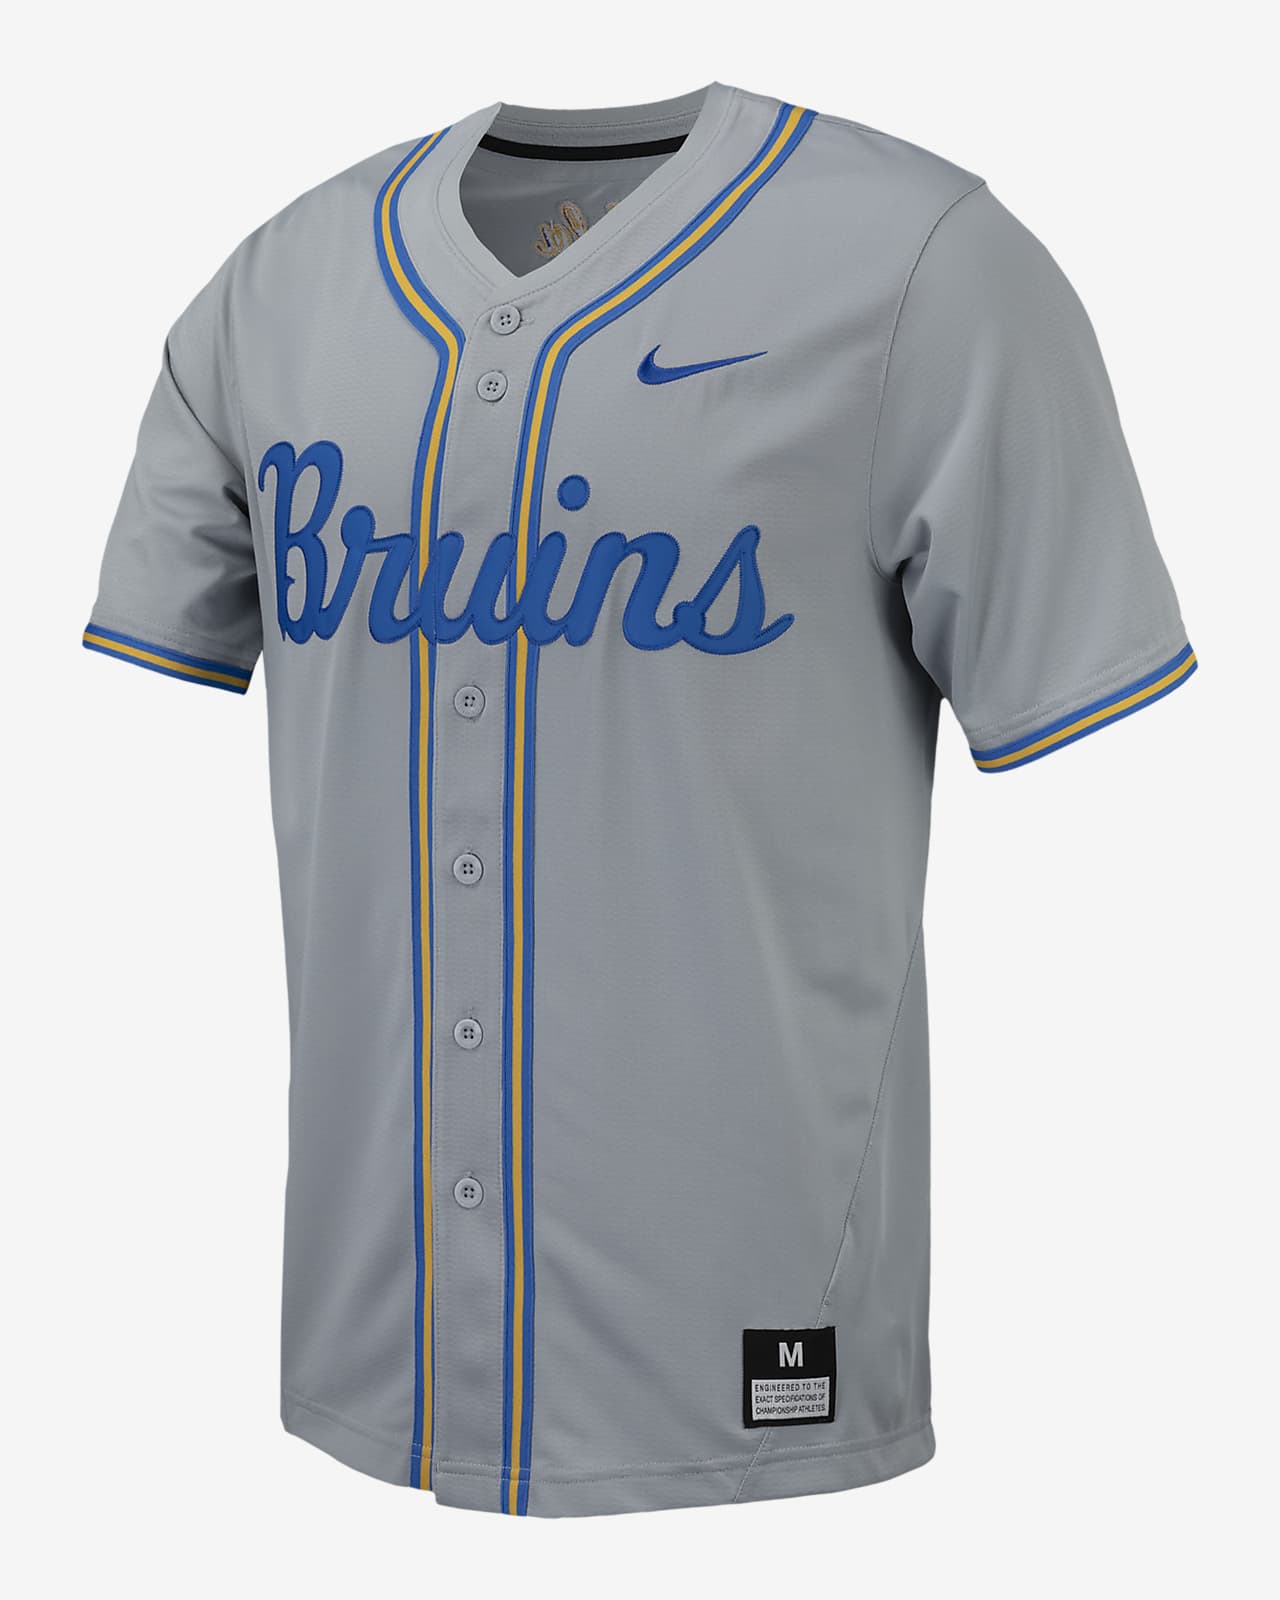 UCLA Men's Nike College Replica Baseball Jersey